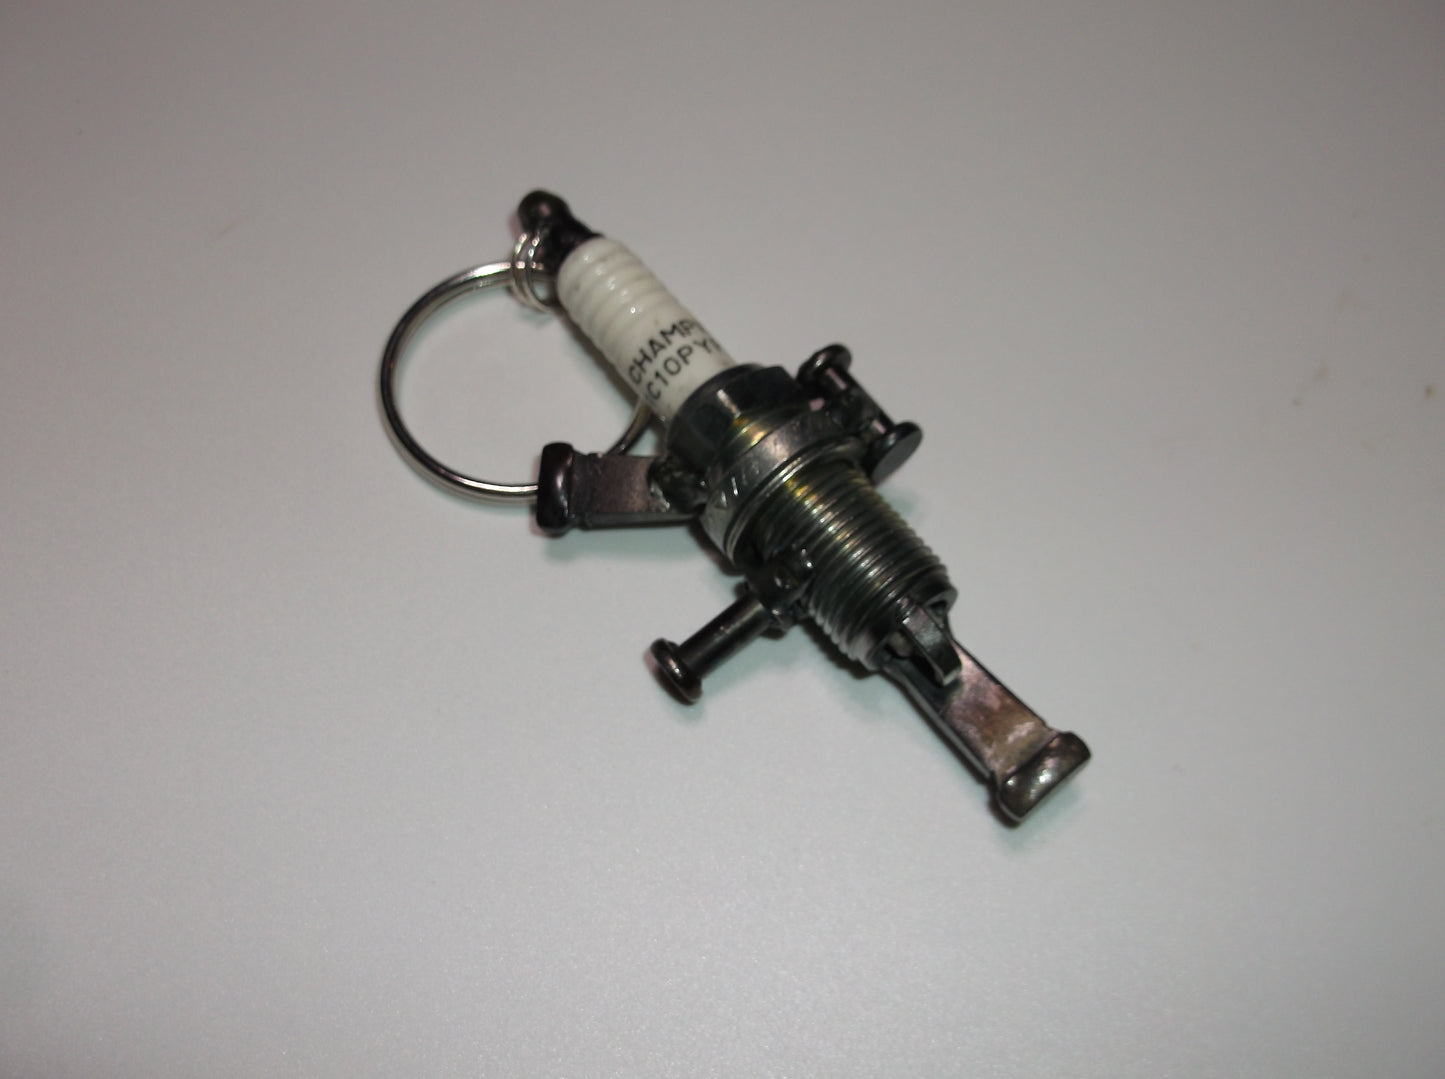 Miniature Machine Gun Key Chain, Up cycled Spark plug